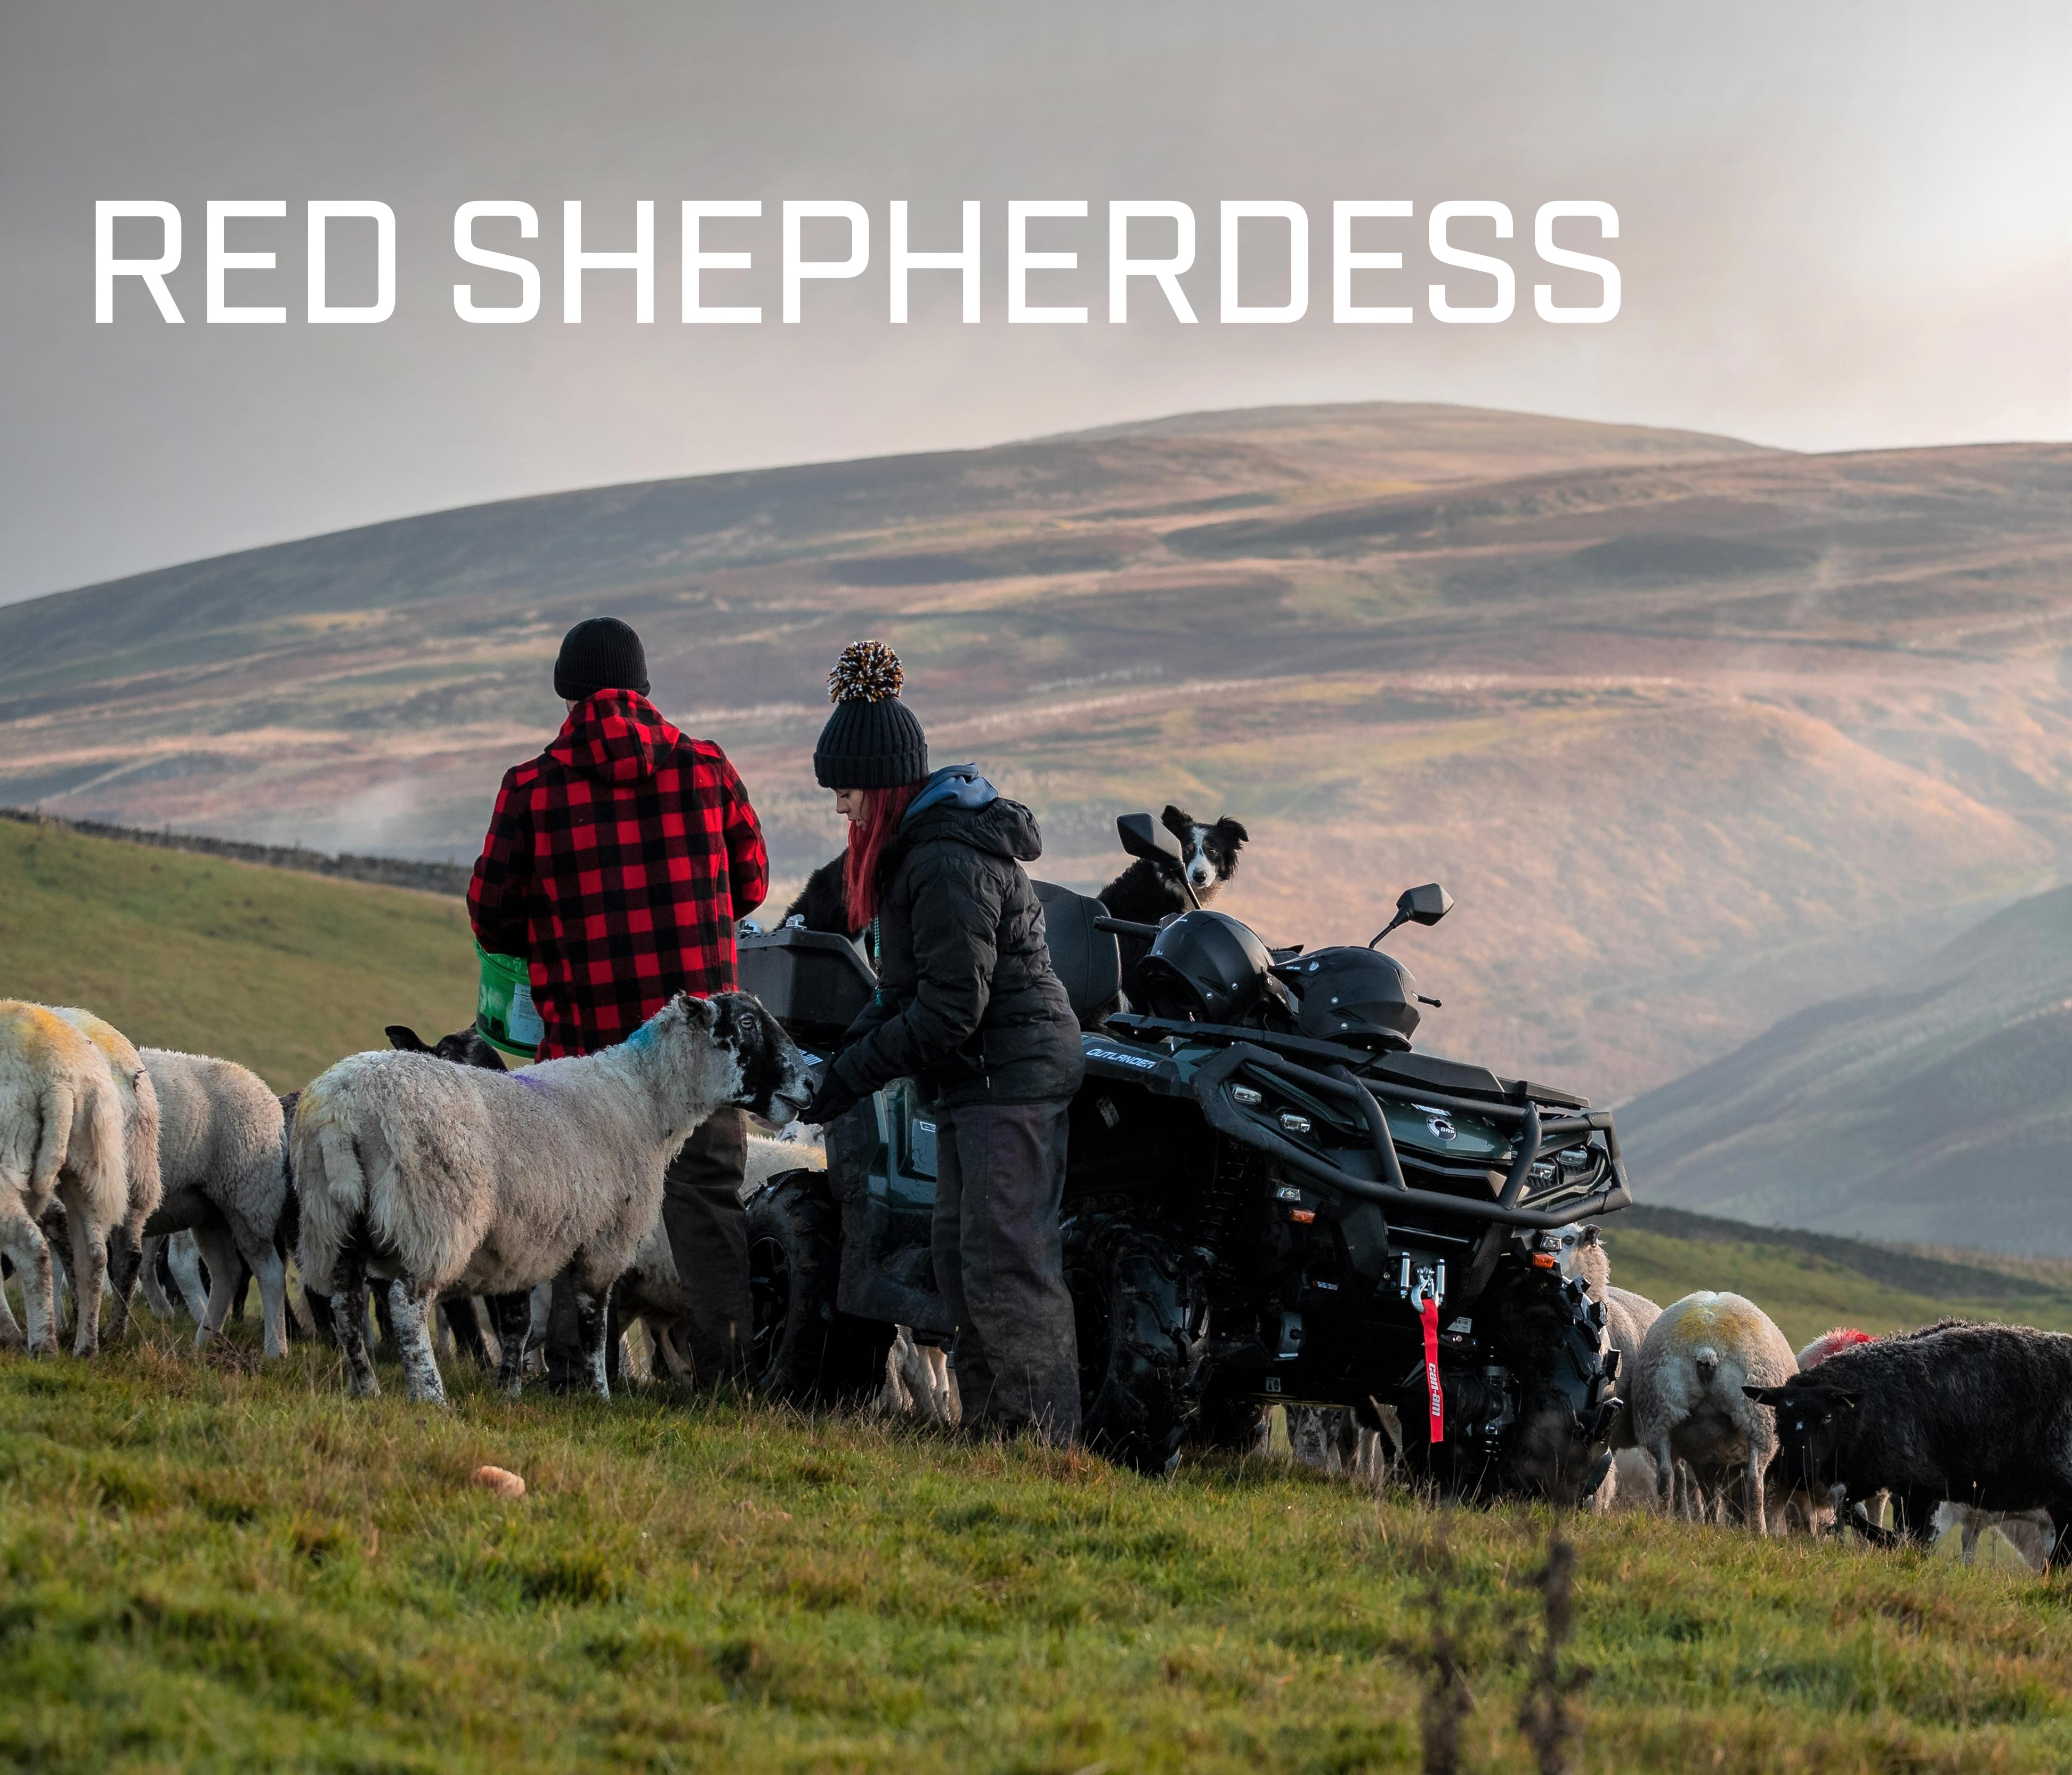 The red shepherdess series thumbnail